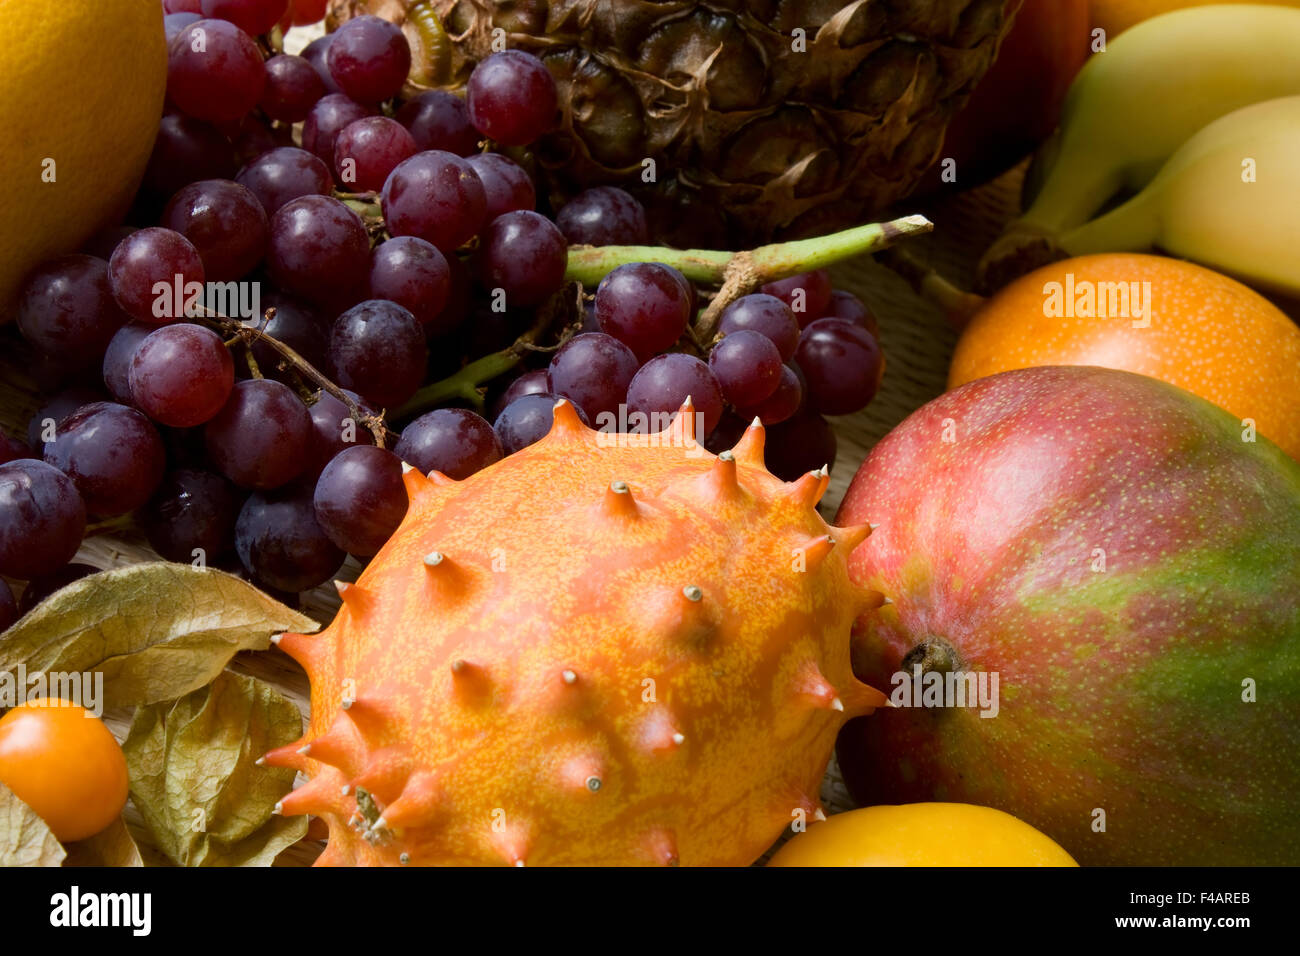 Fruechte Stillleben - Fruits compostion Stock Photo